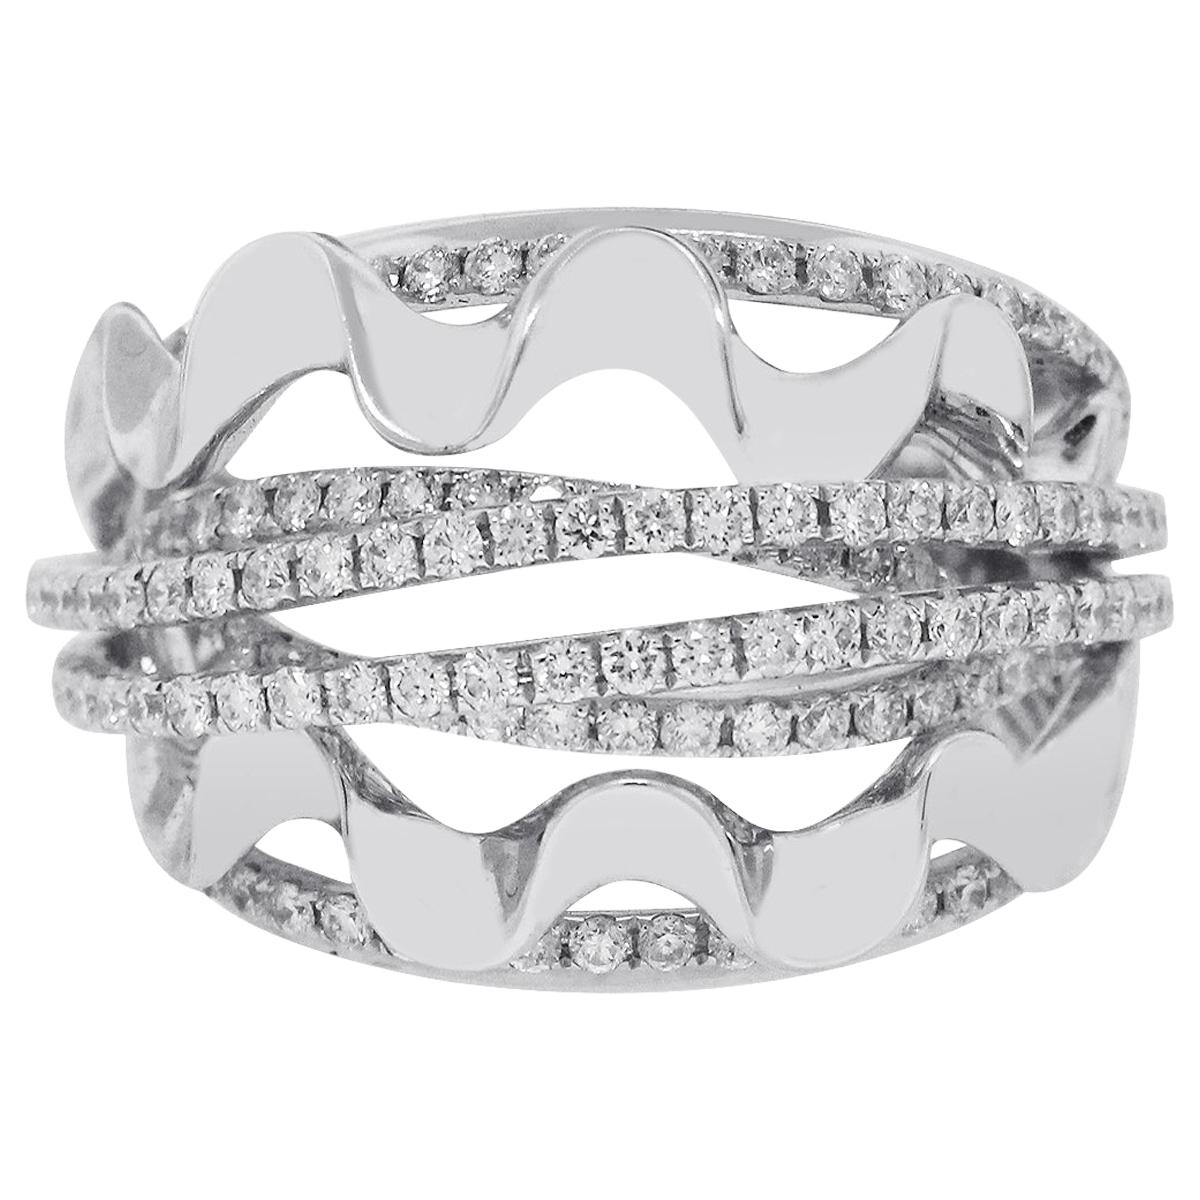 1.56 Carat Diamond Ring